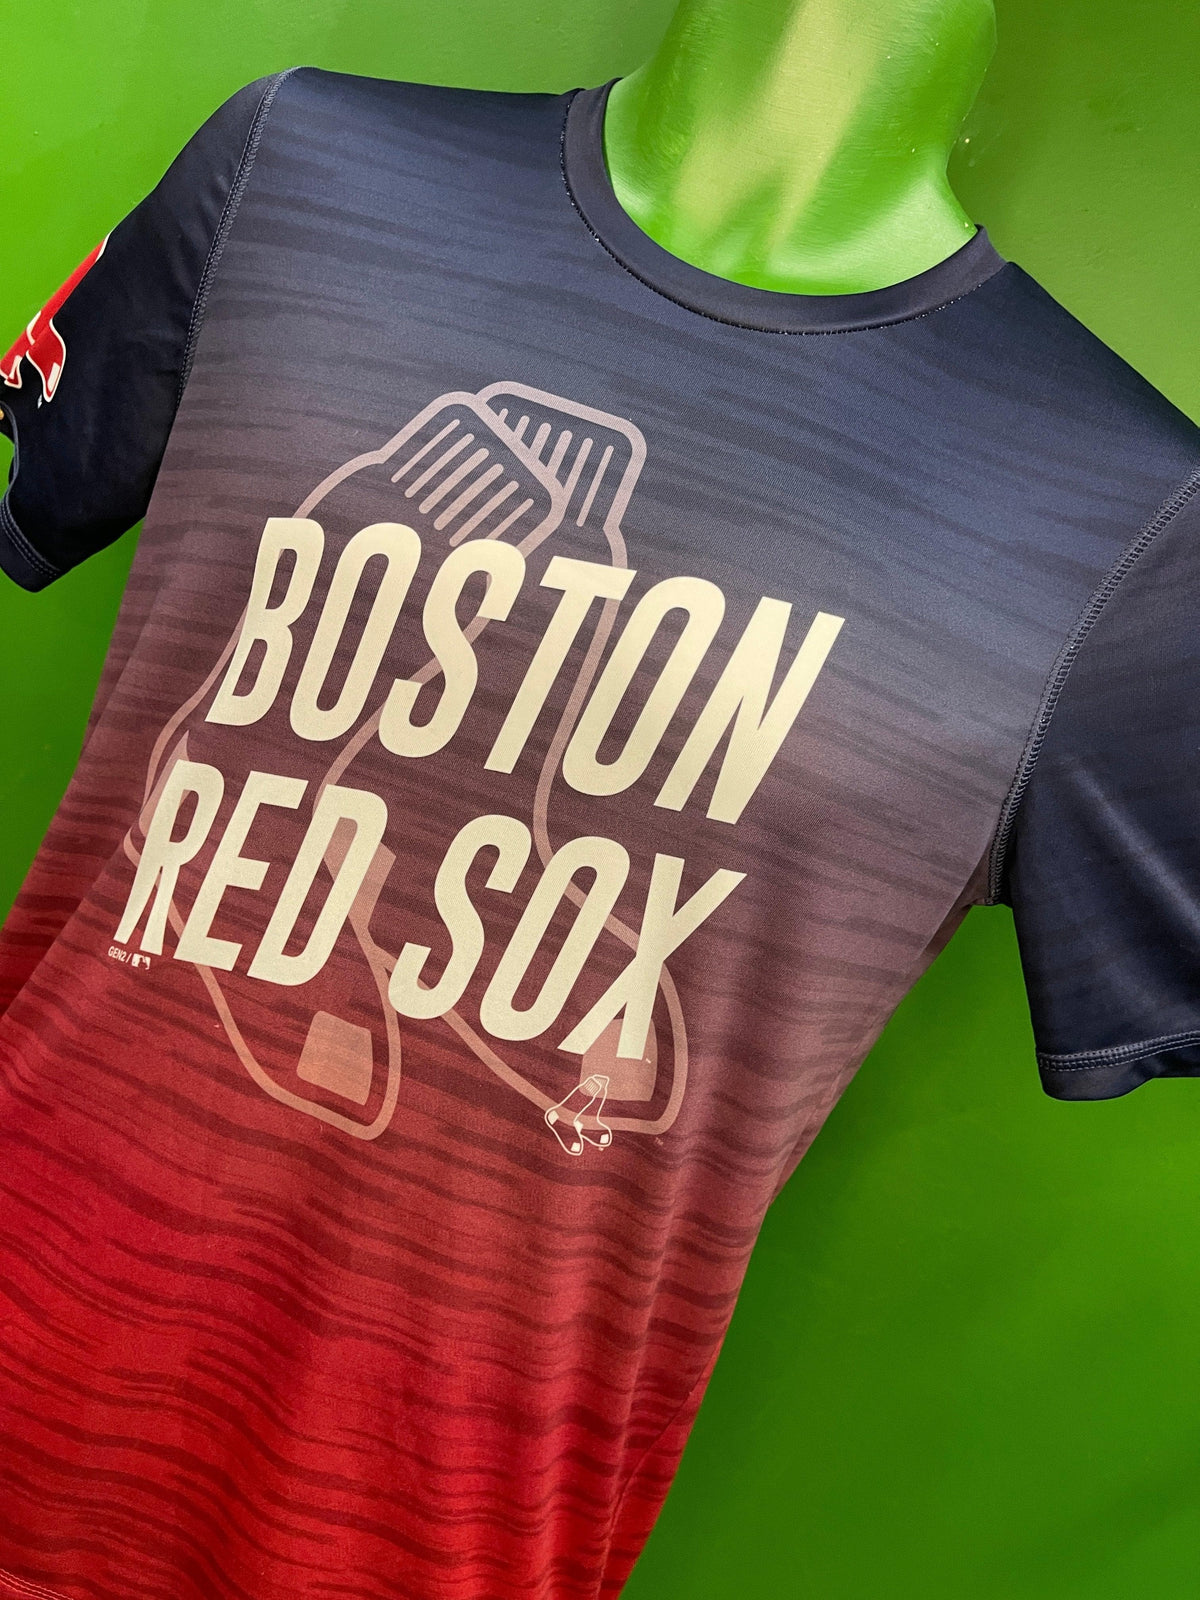 MLB Boston Red Sox Sports T-Shirt Youth Large 14-16